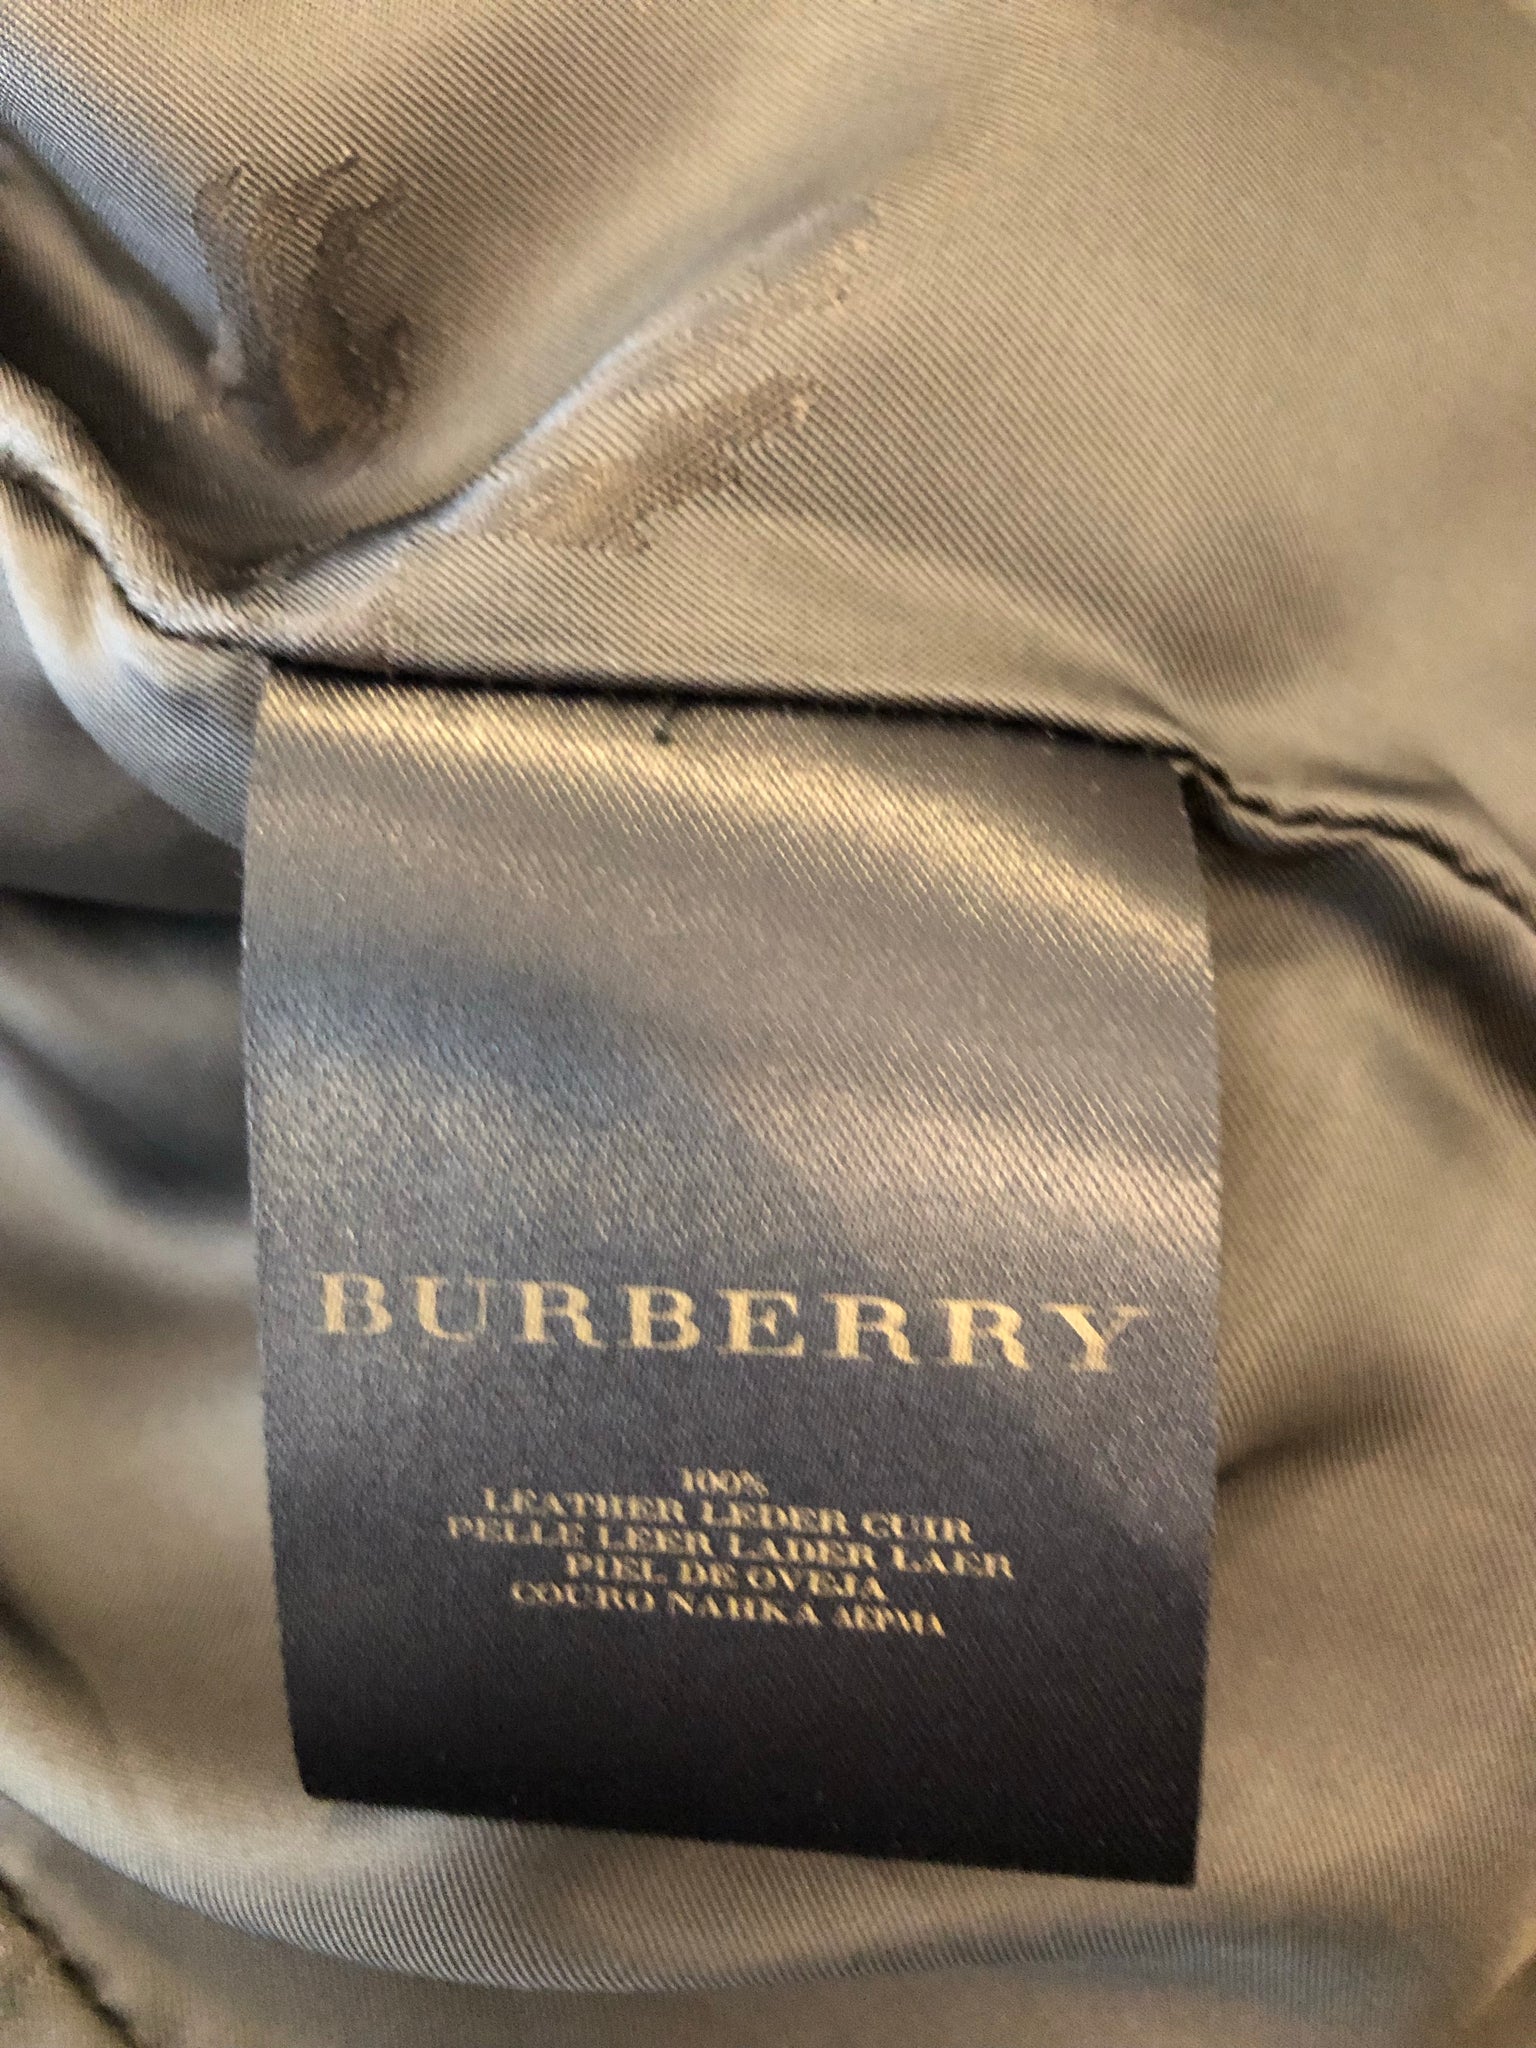 Isabella's Wardrobe Burberry Lambskin Jacket.